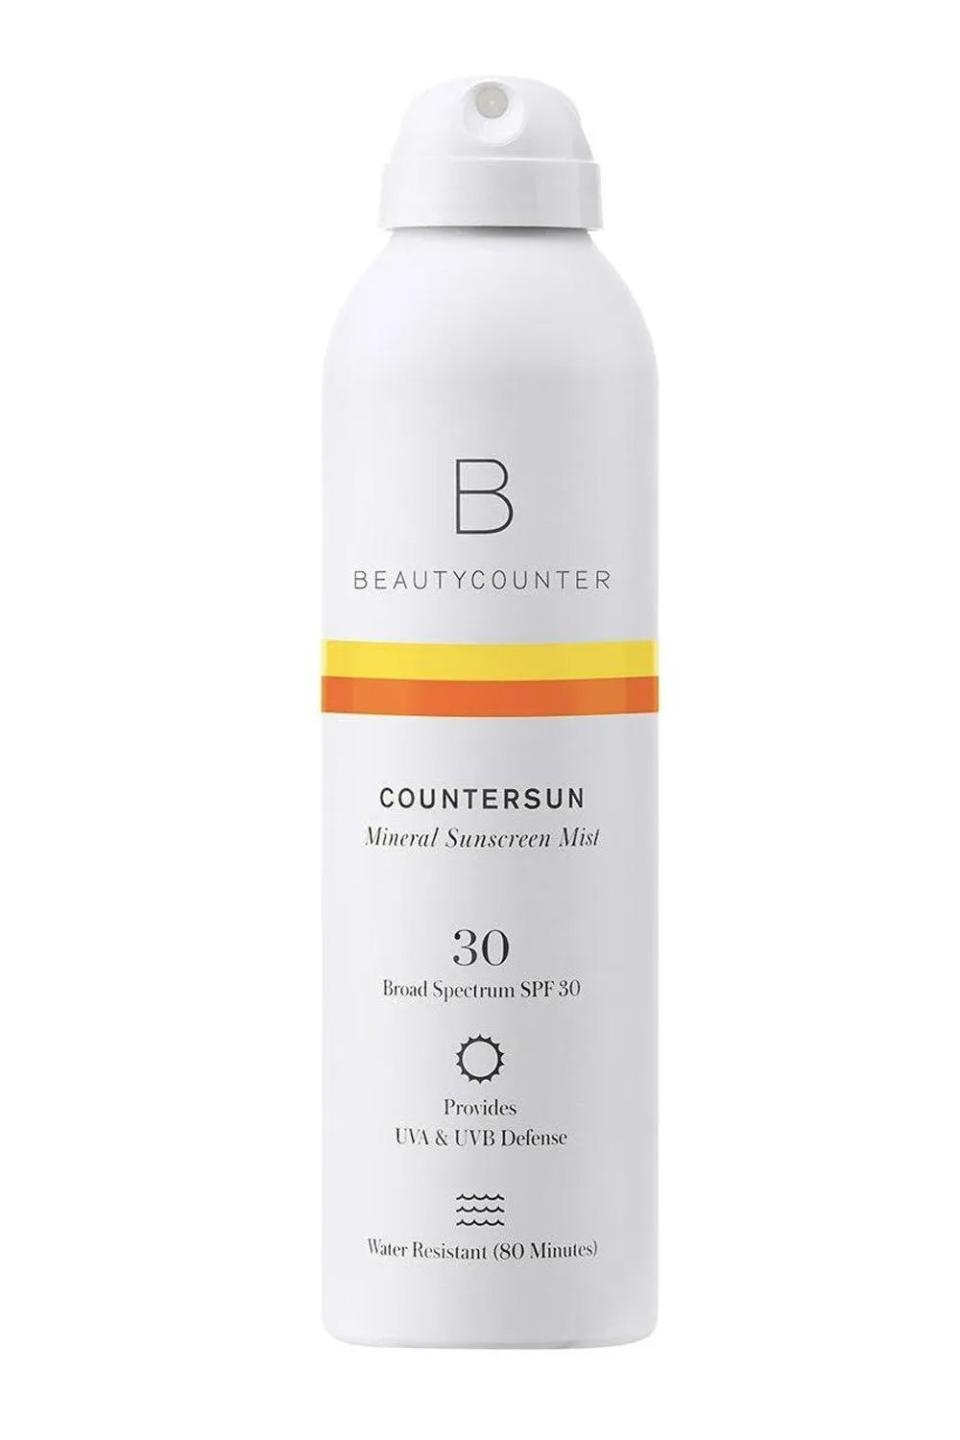 12) Beautycounter Countersun Mineral Sunscreen Mist SPF 30